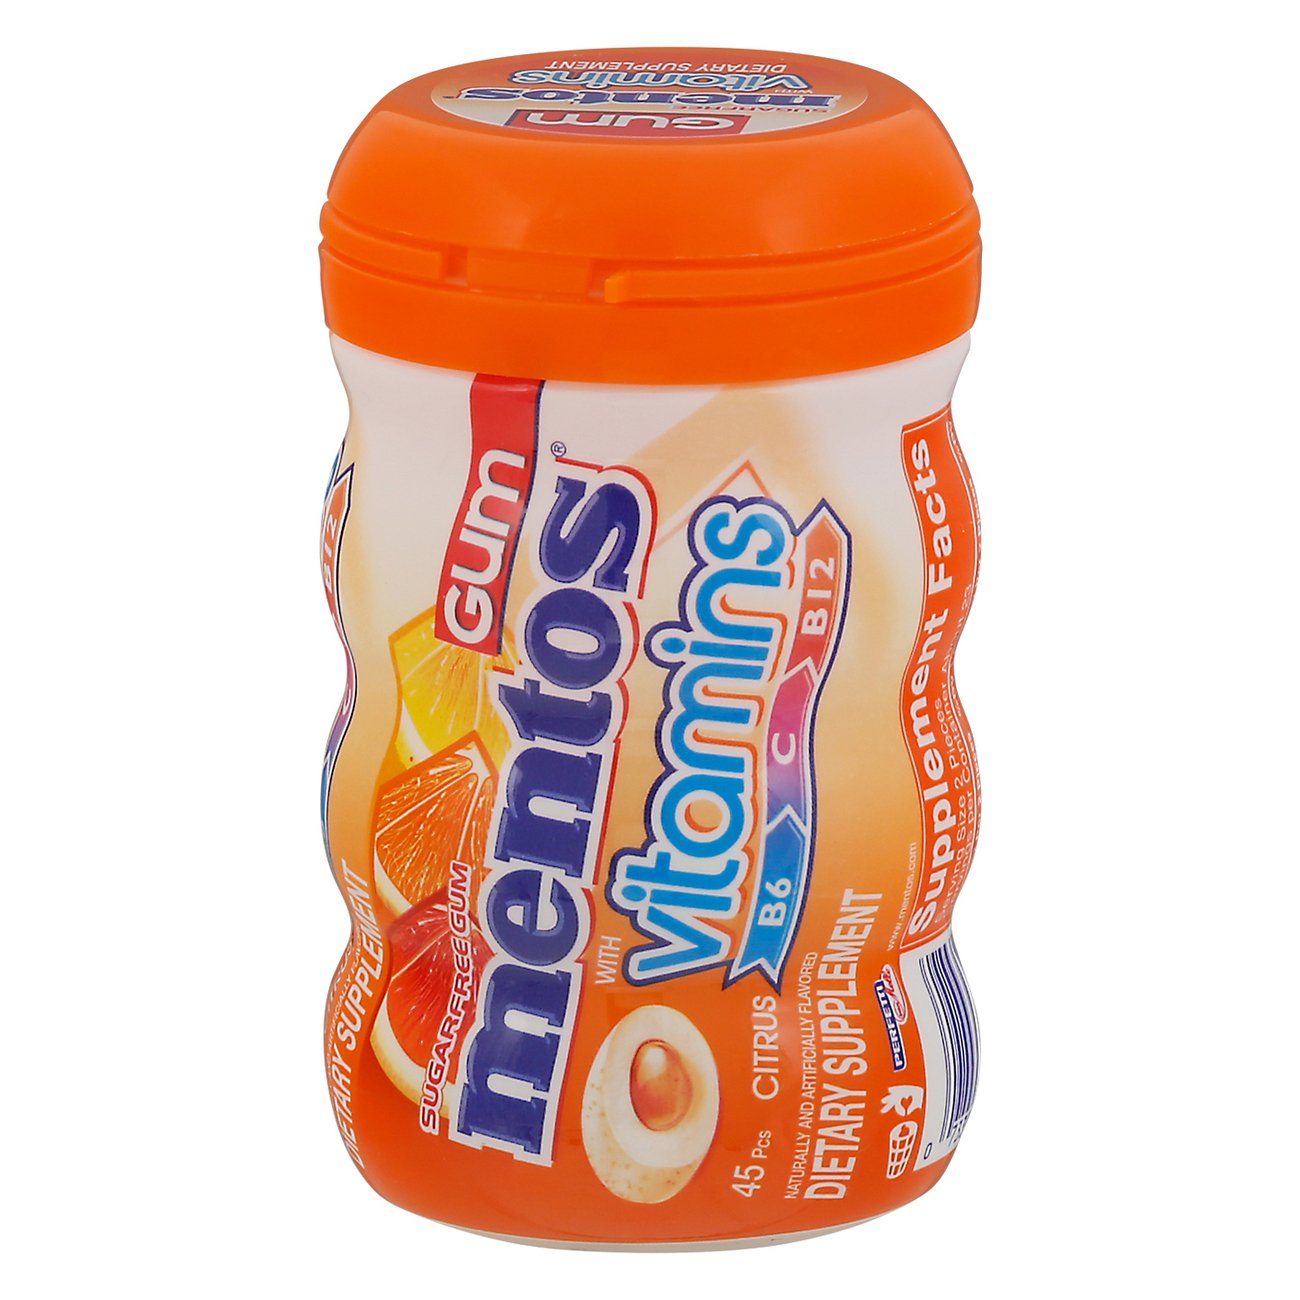 Mentos Sugar Free Citrus Flavored Chewing Gum with Vitamins, 45 ct - Kroger